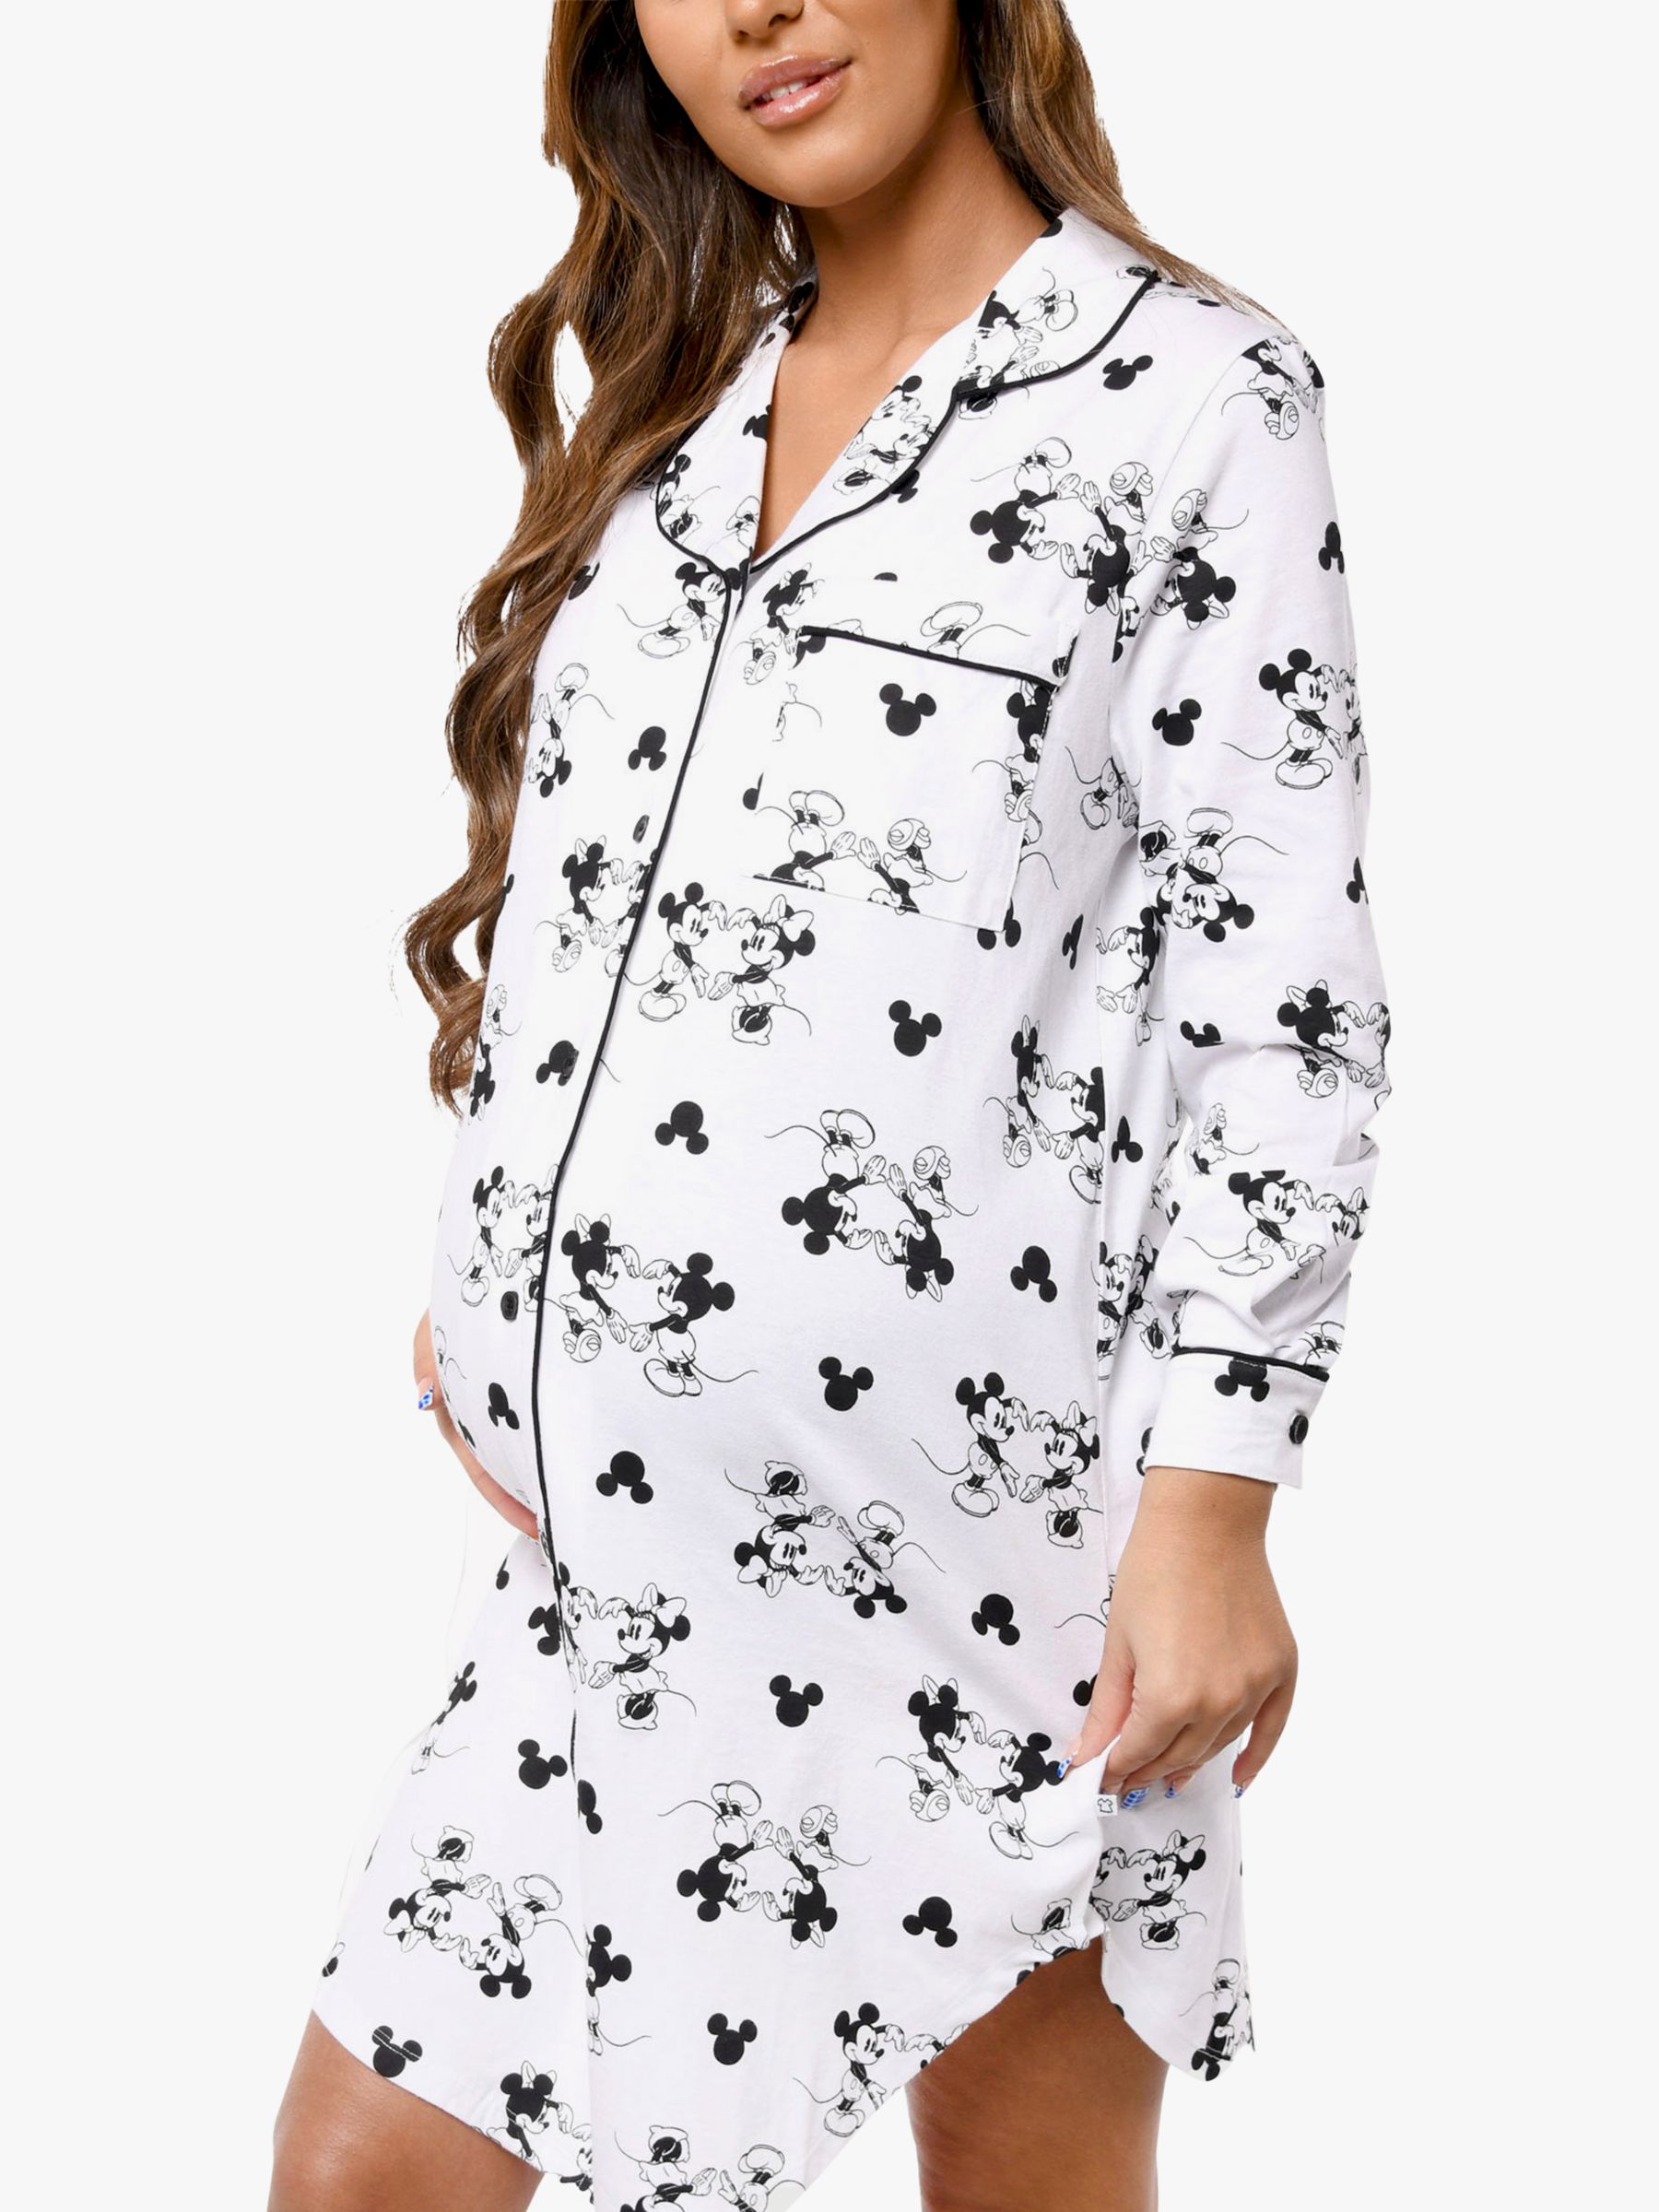 Brand Threads Maternity Mickey Mouse Nightdress, White, XS